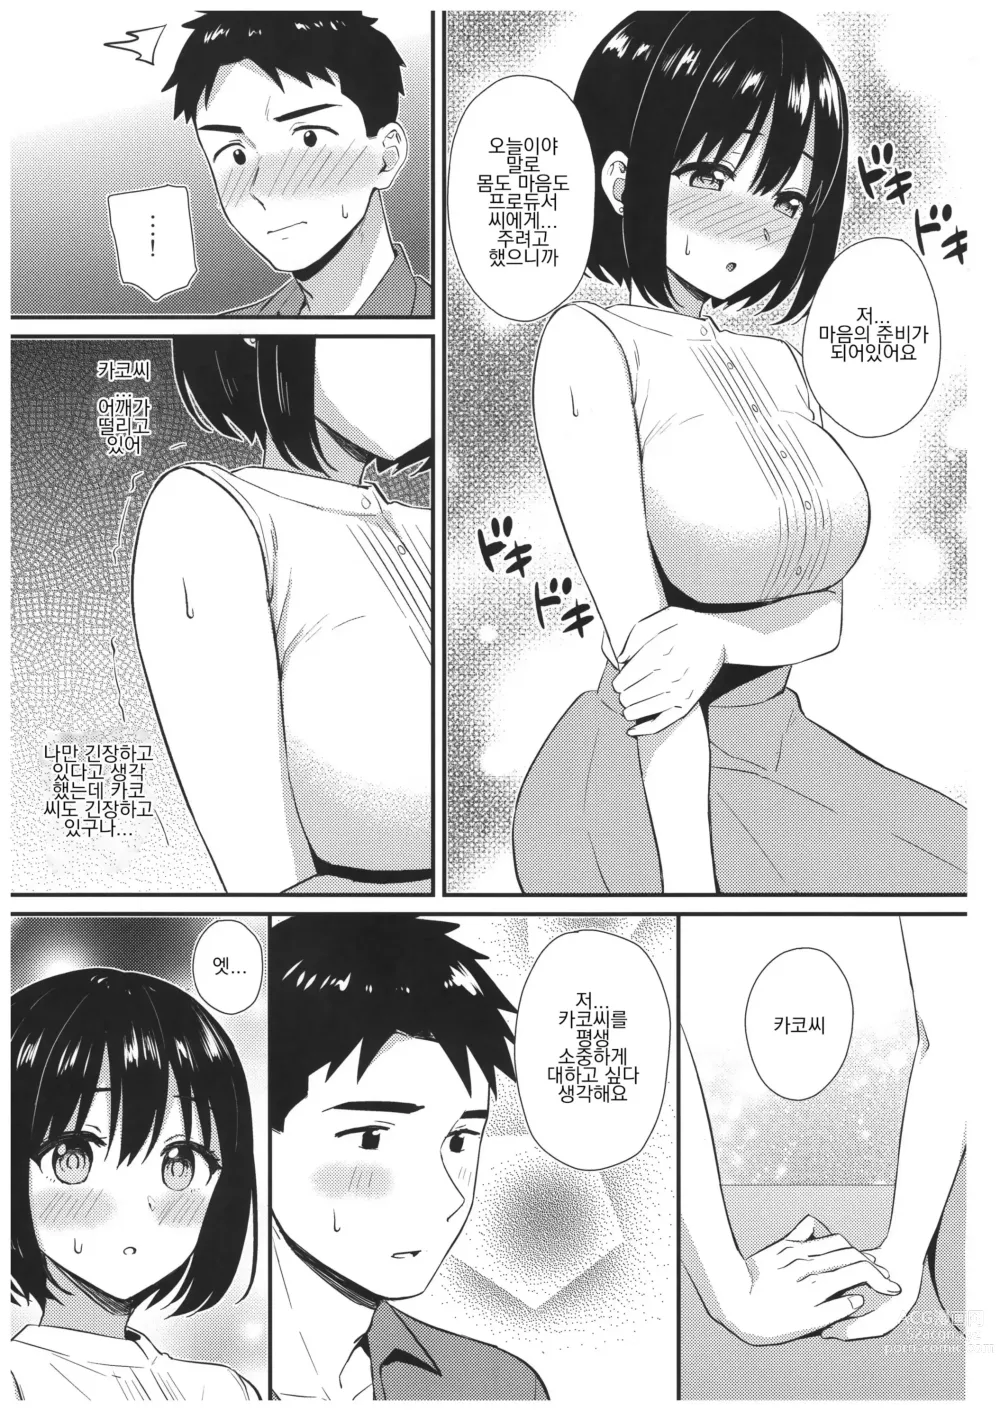 Page 8 of doujinshi 카코 씨와 첫 경험.